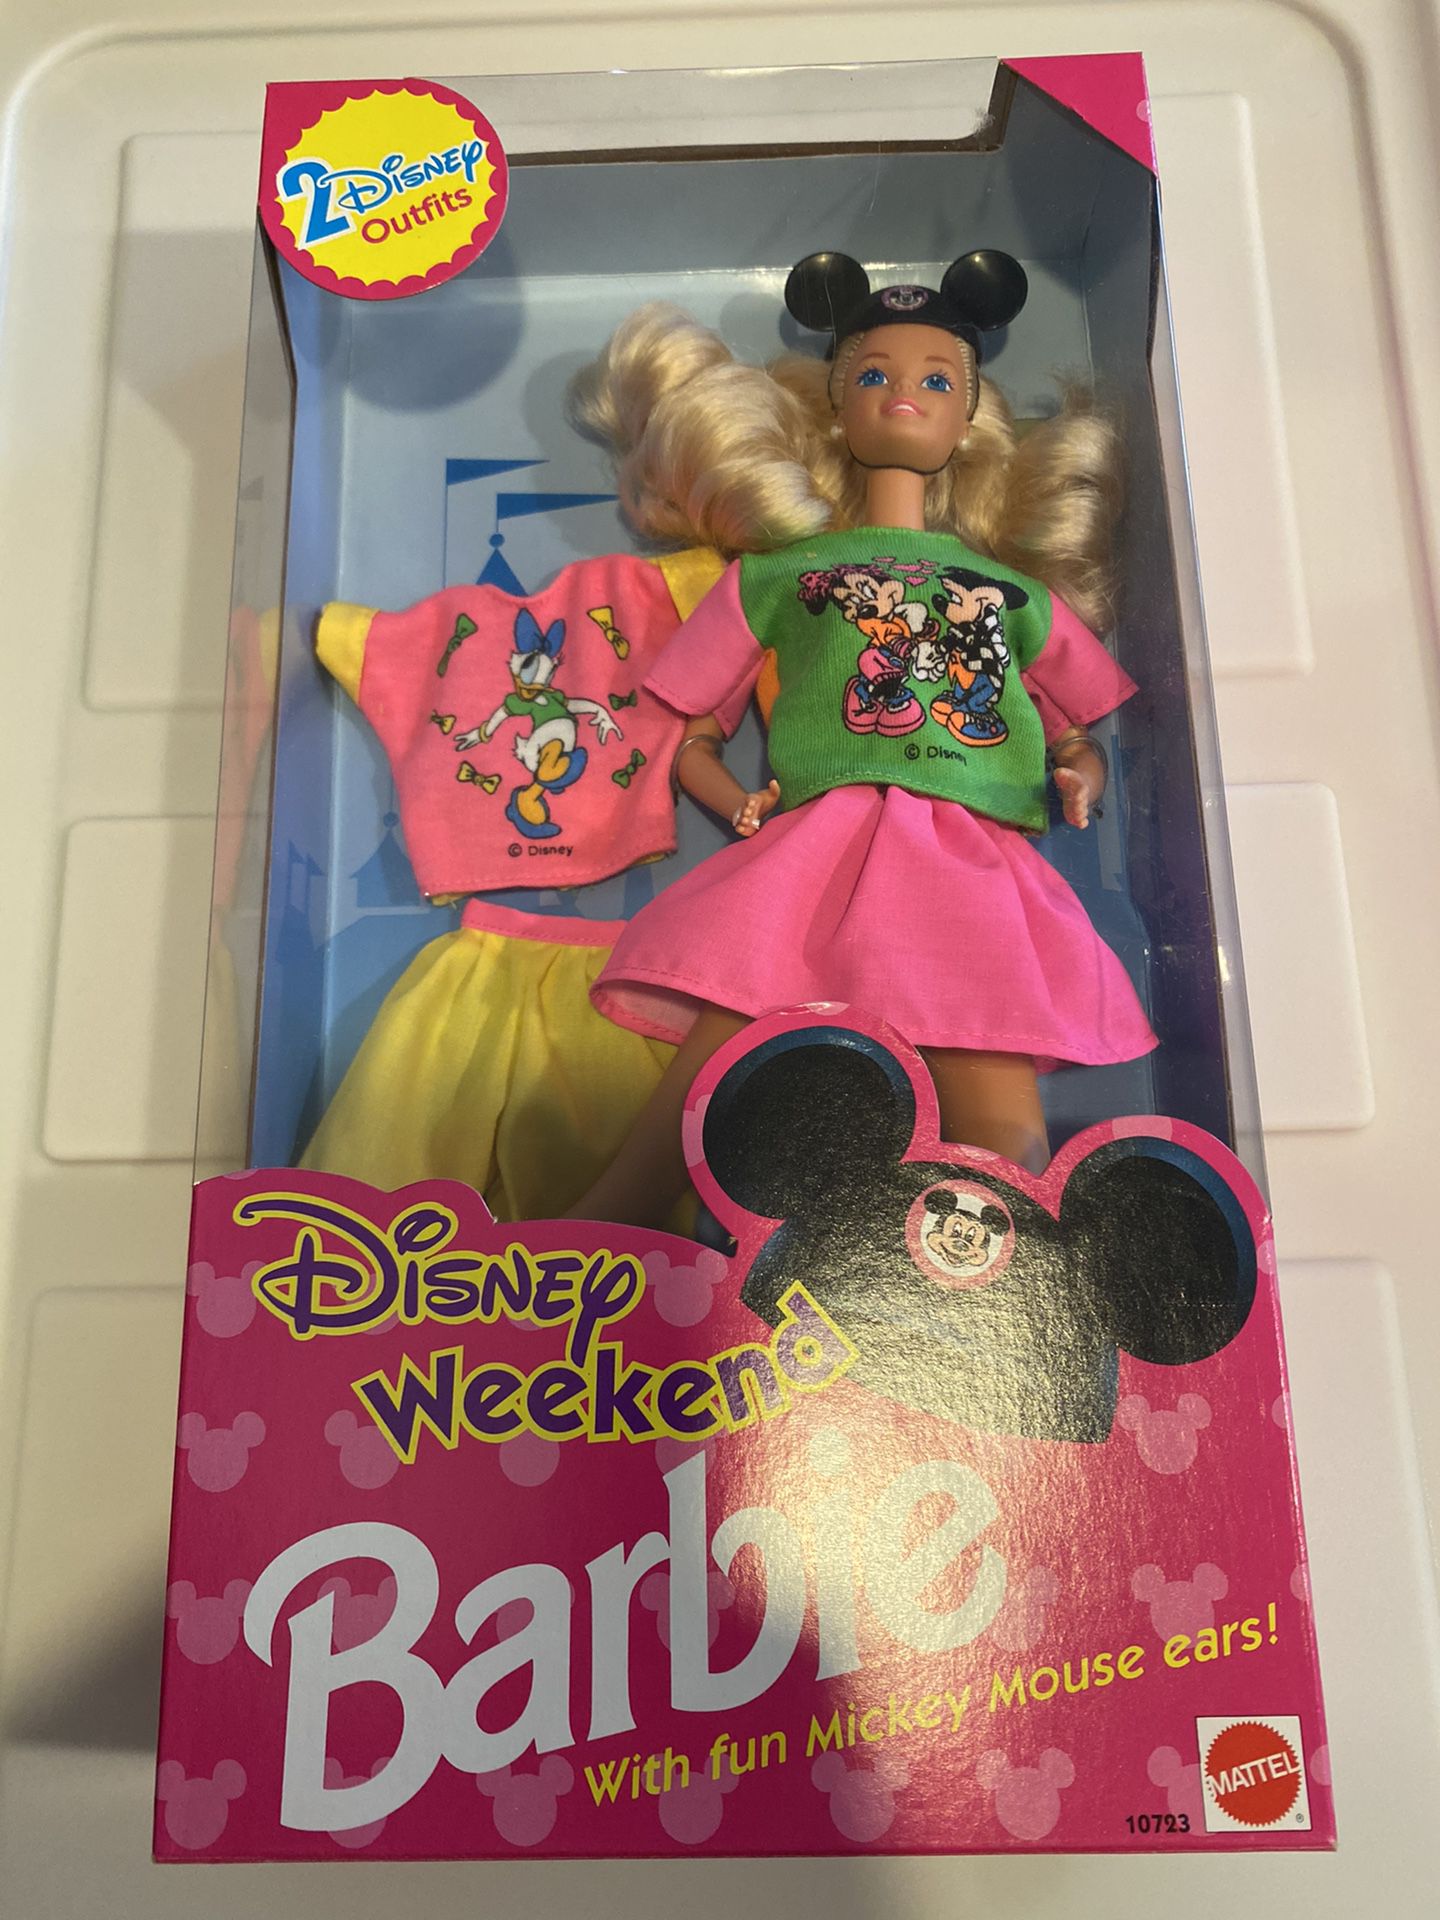 Barbie Disney Weekend with fun Mickey Mouse ears